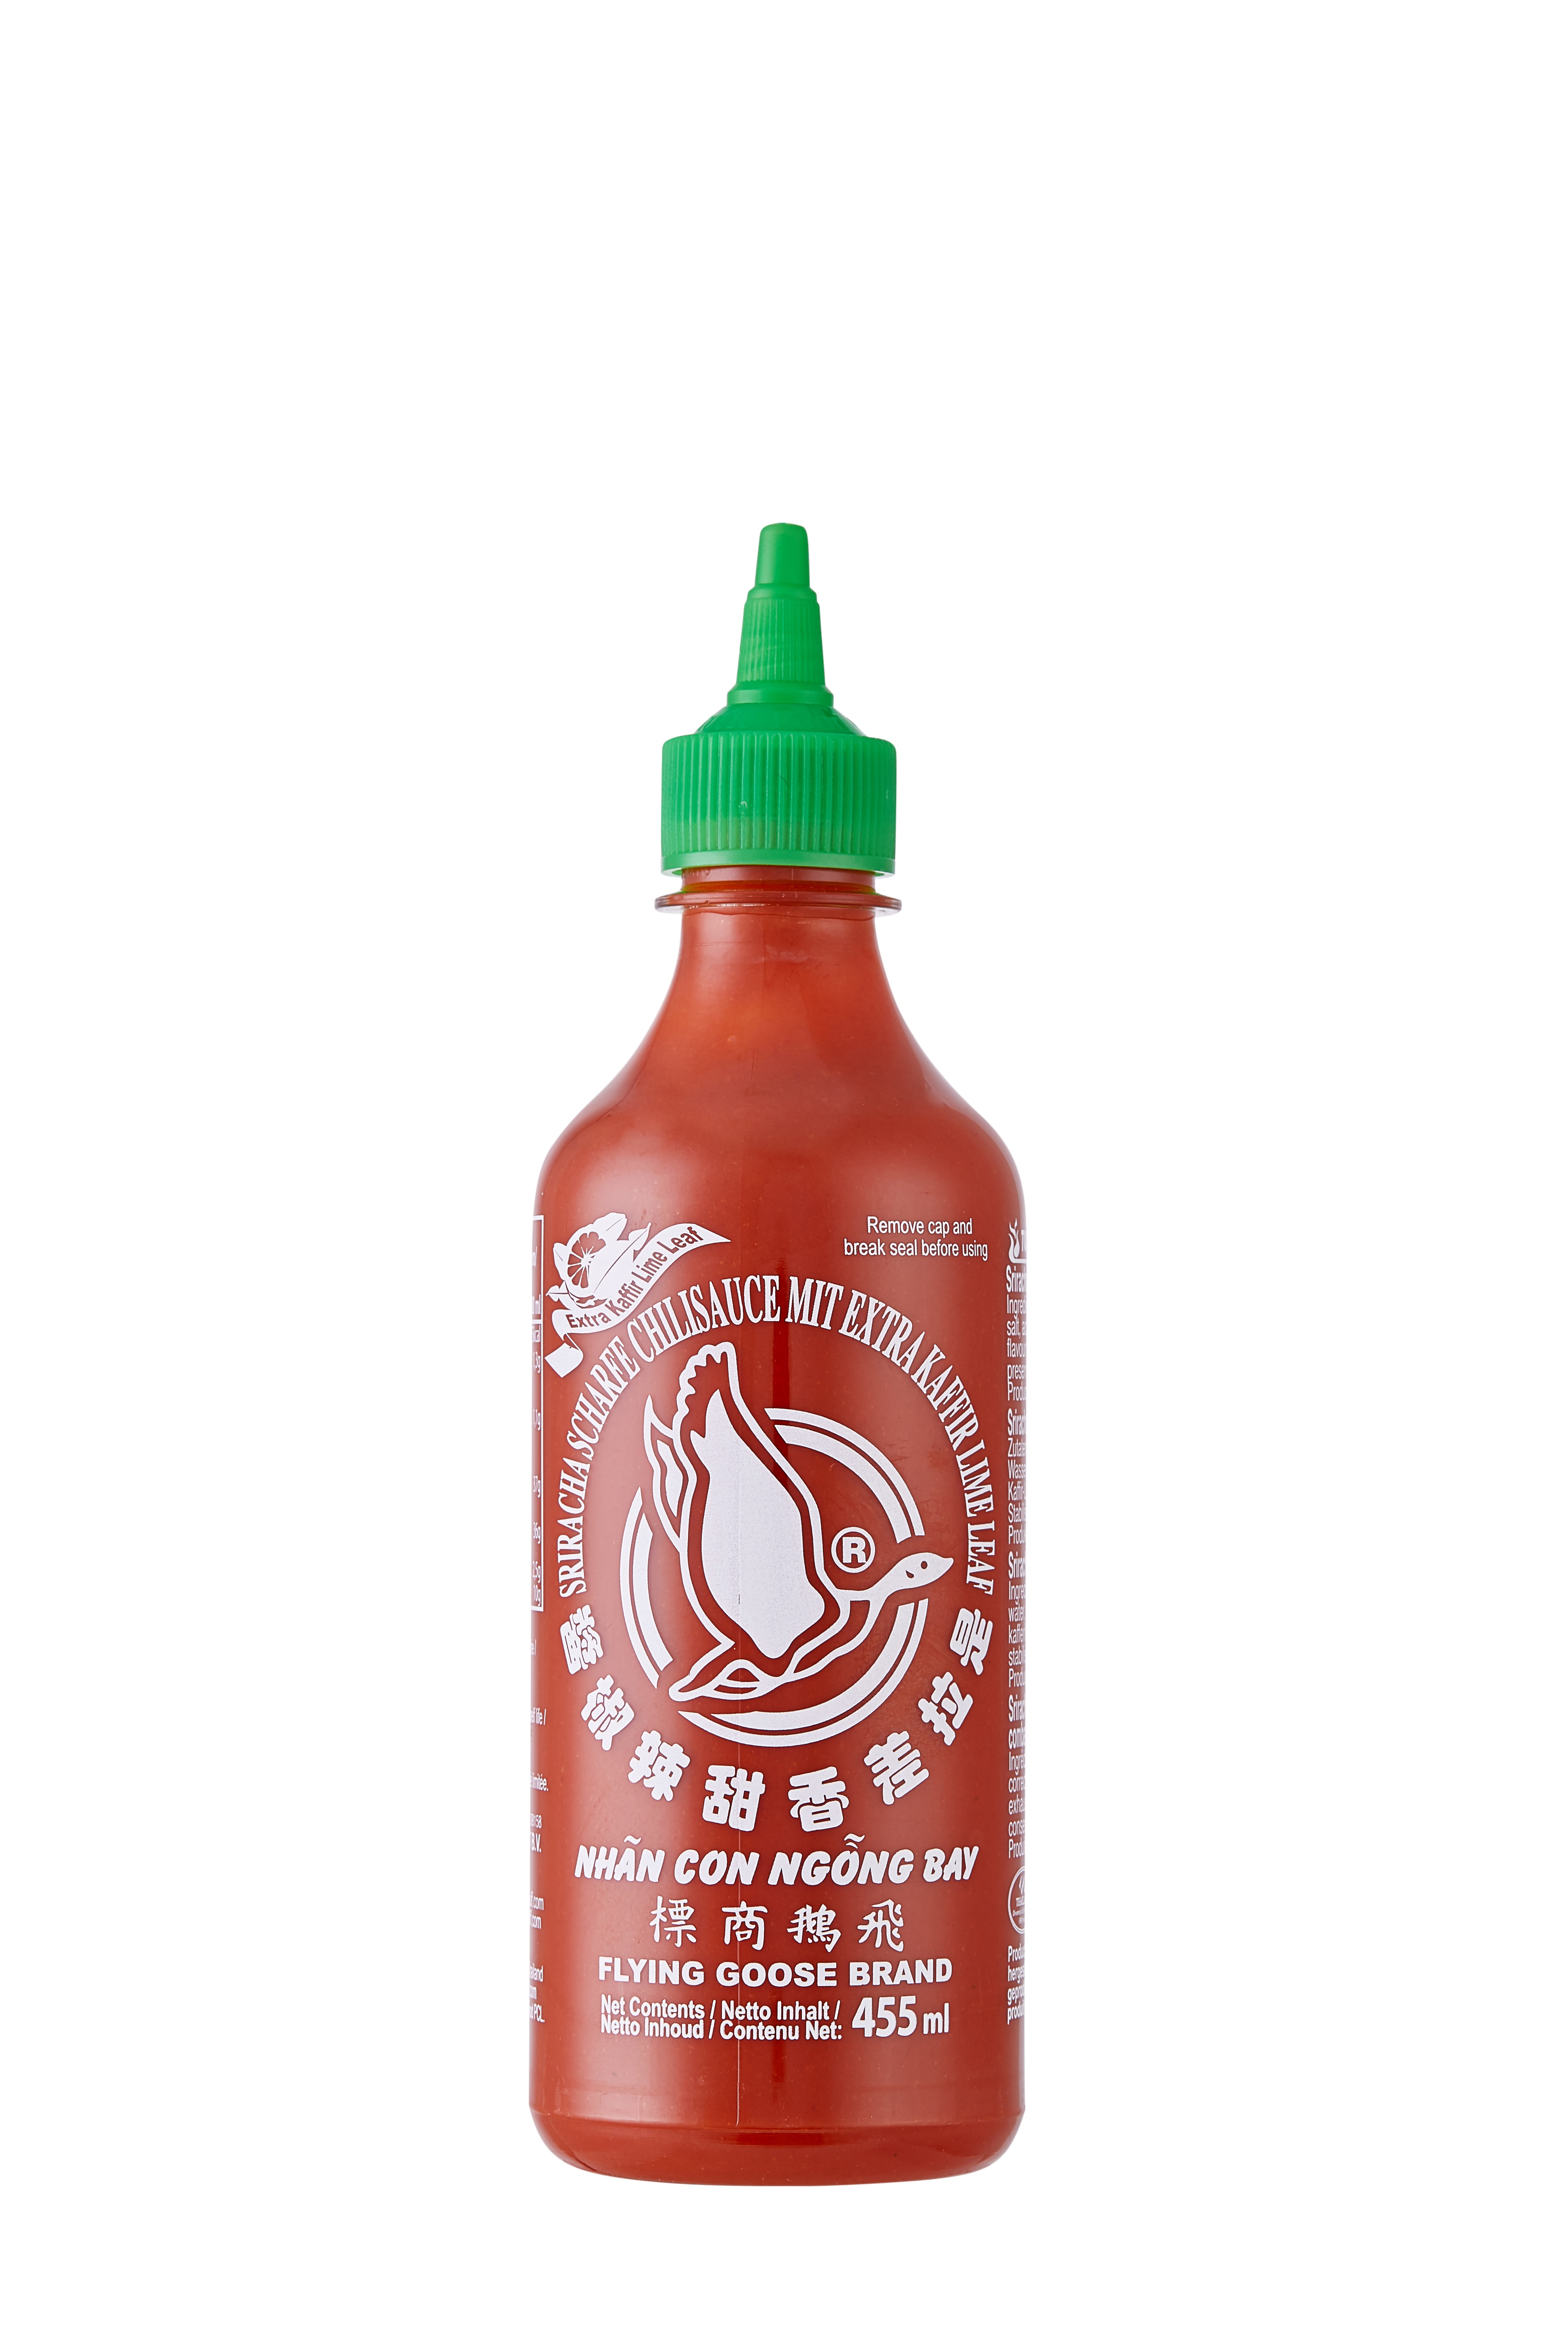 78073 Sriracha chili saus kaffir lime 455ml